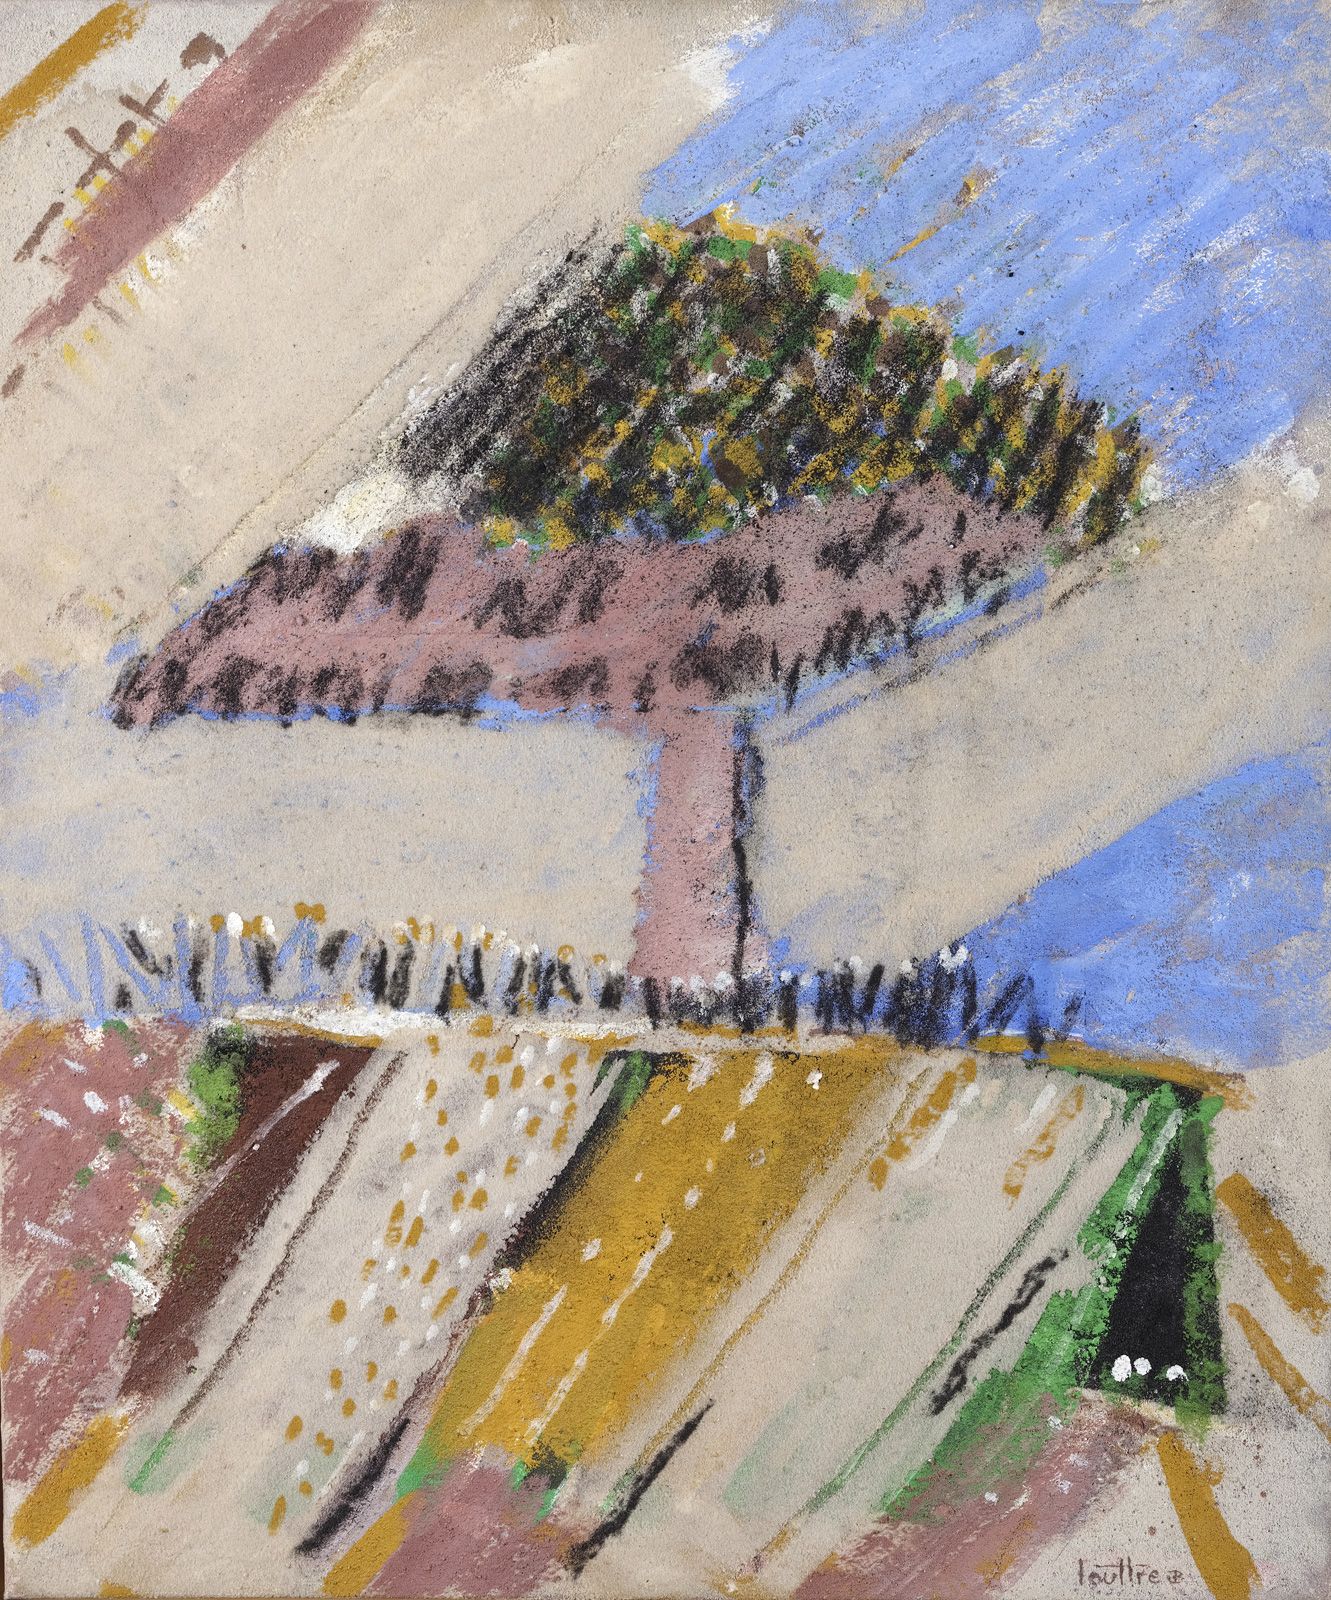 Null 沃尔夫拉姆(1926-2012)

Bonzai，1981年

油画和沙画布上右下角有签名，背面有副署、题名和年代。

65x55厘米

证明：阿姆斯&hellip;